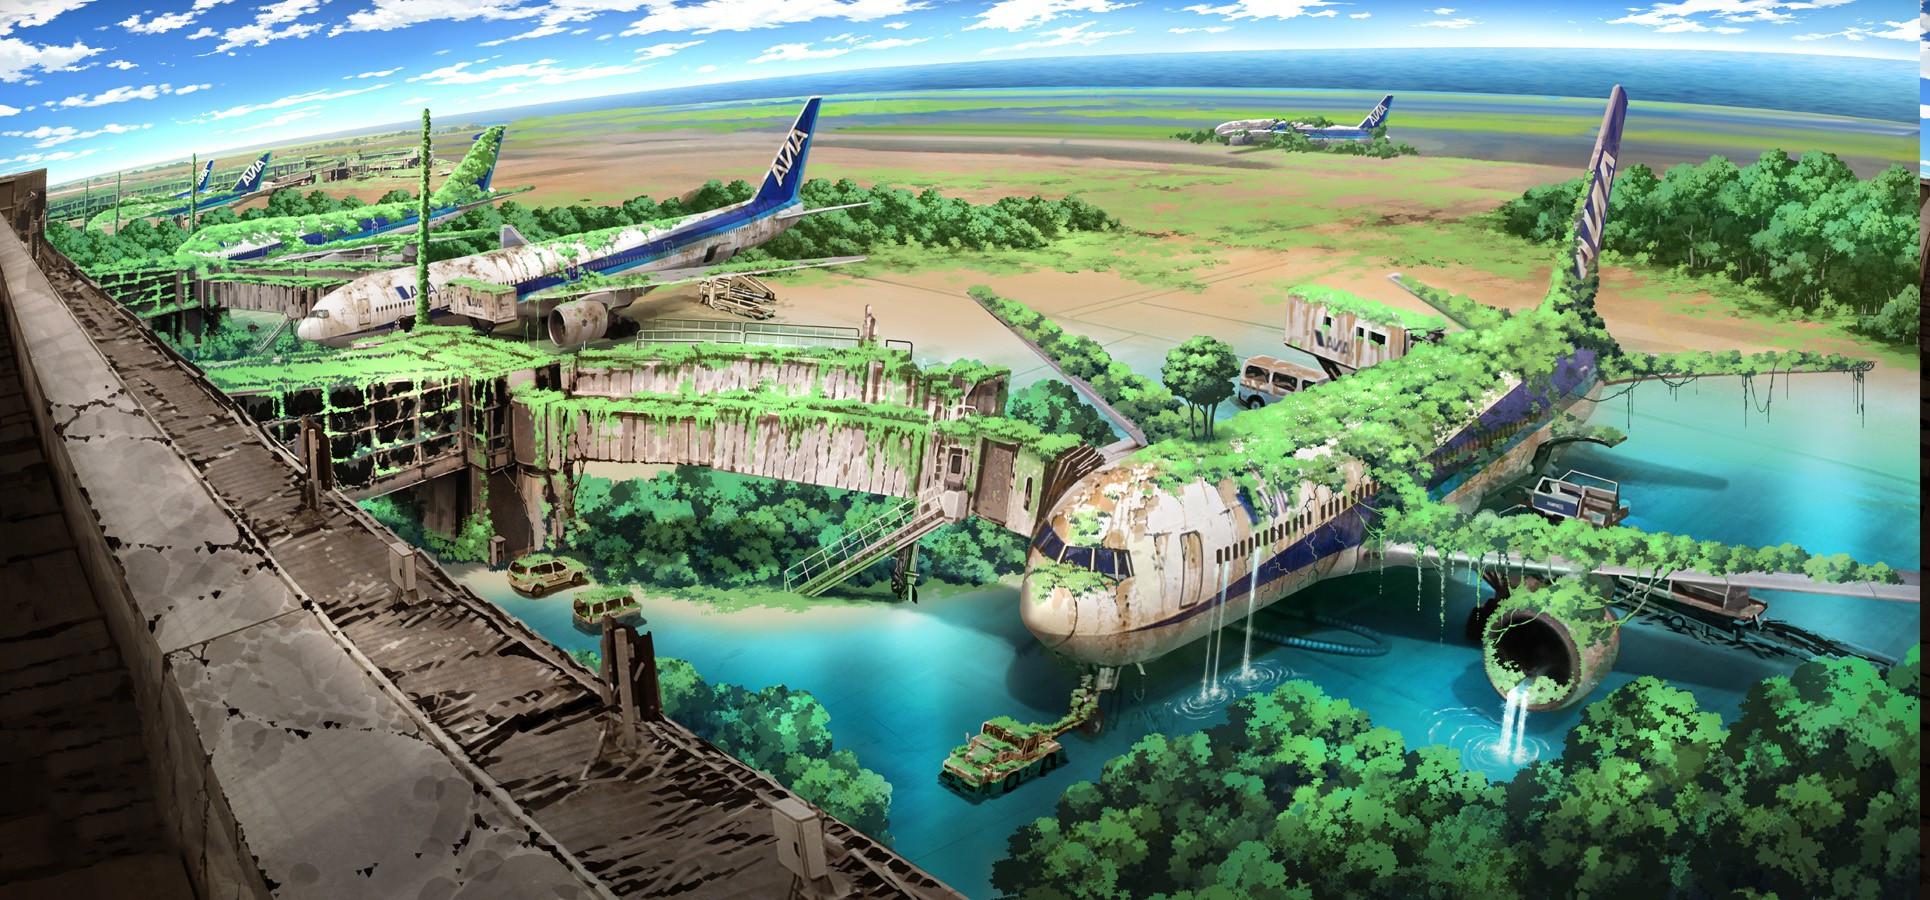 Best ideas about Anime Landscape Wallpaper
. Save or Pin anime Landscape Wallpapers HD Desktop and Mobile Now.